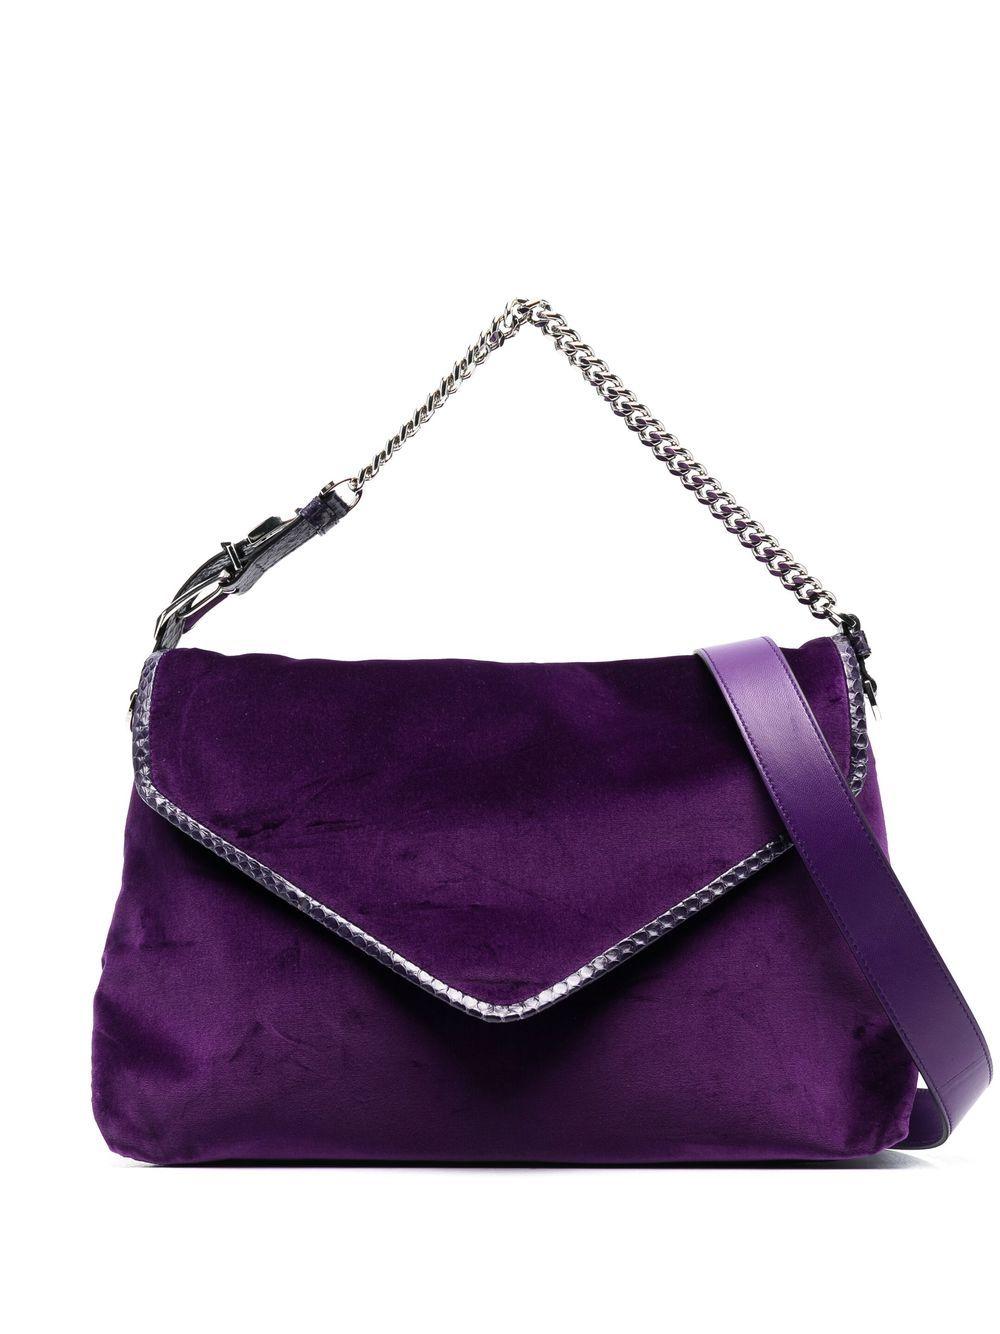 Alberta Ferretti Dori Velvet Shoulder Bag in Purple | Lyst